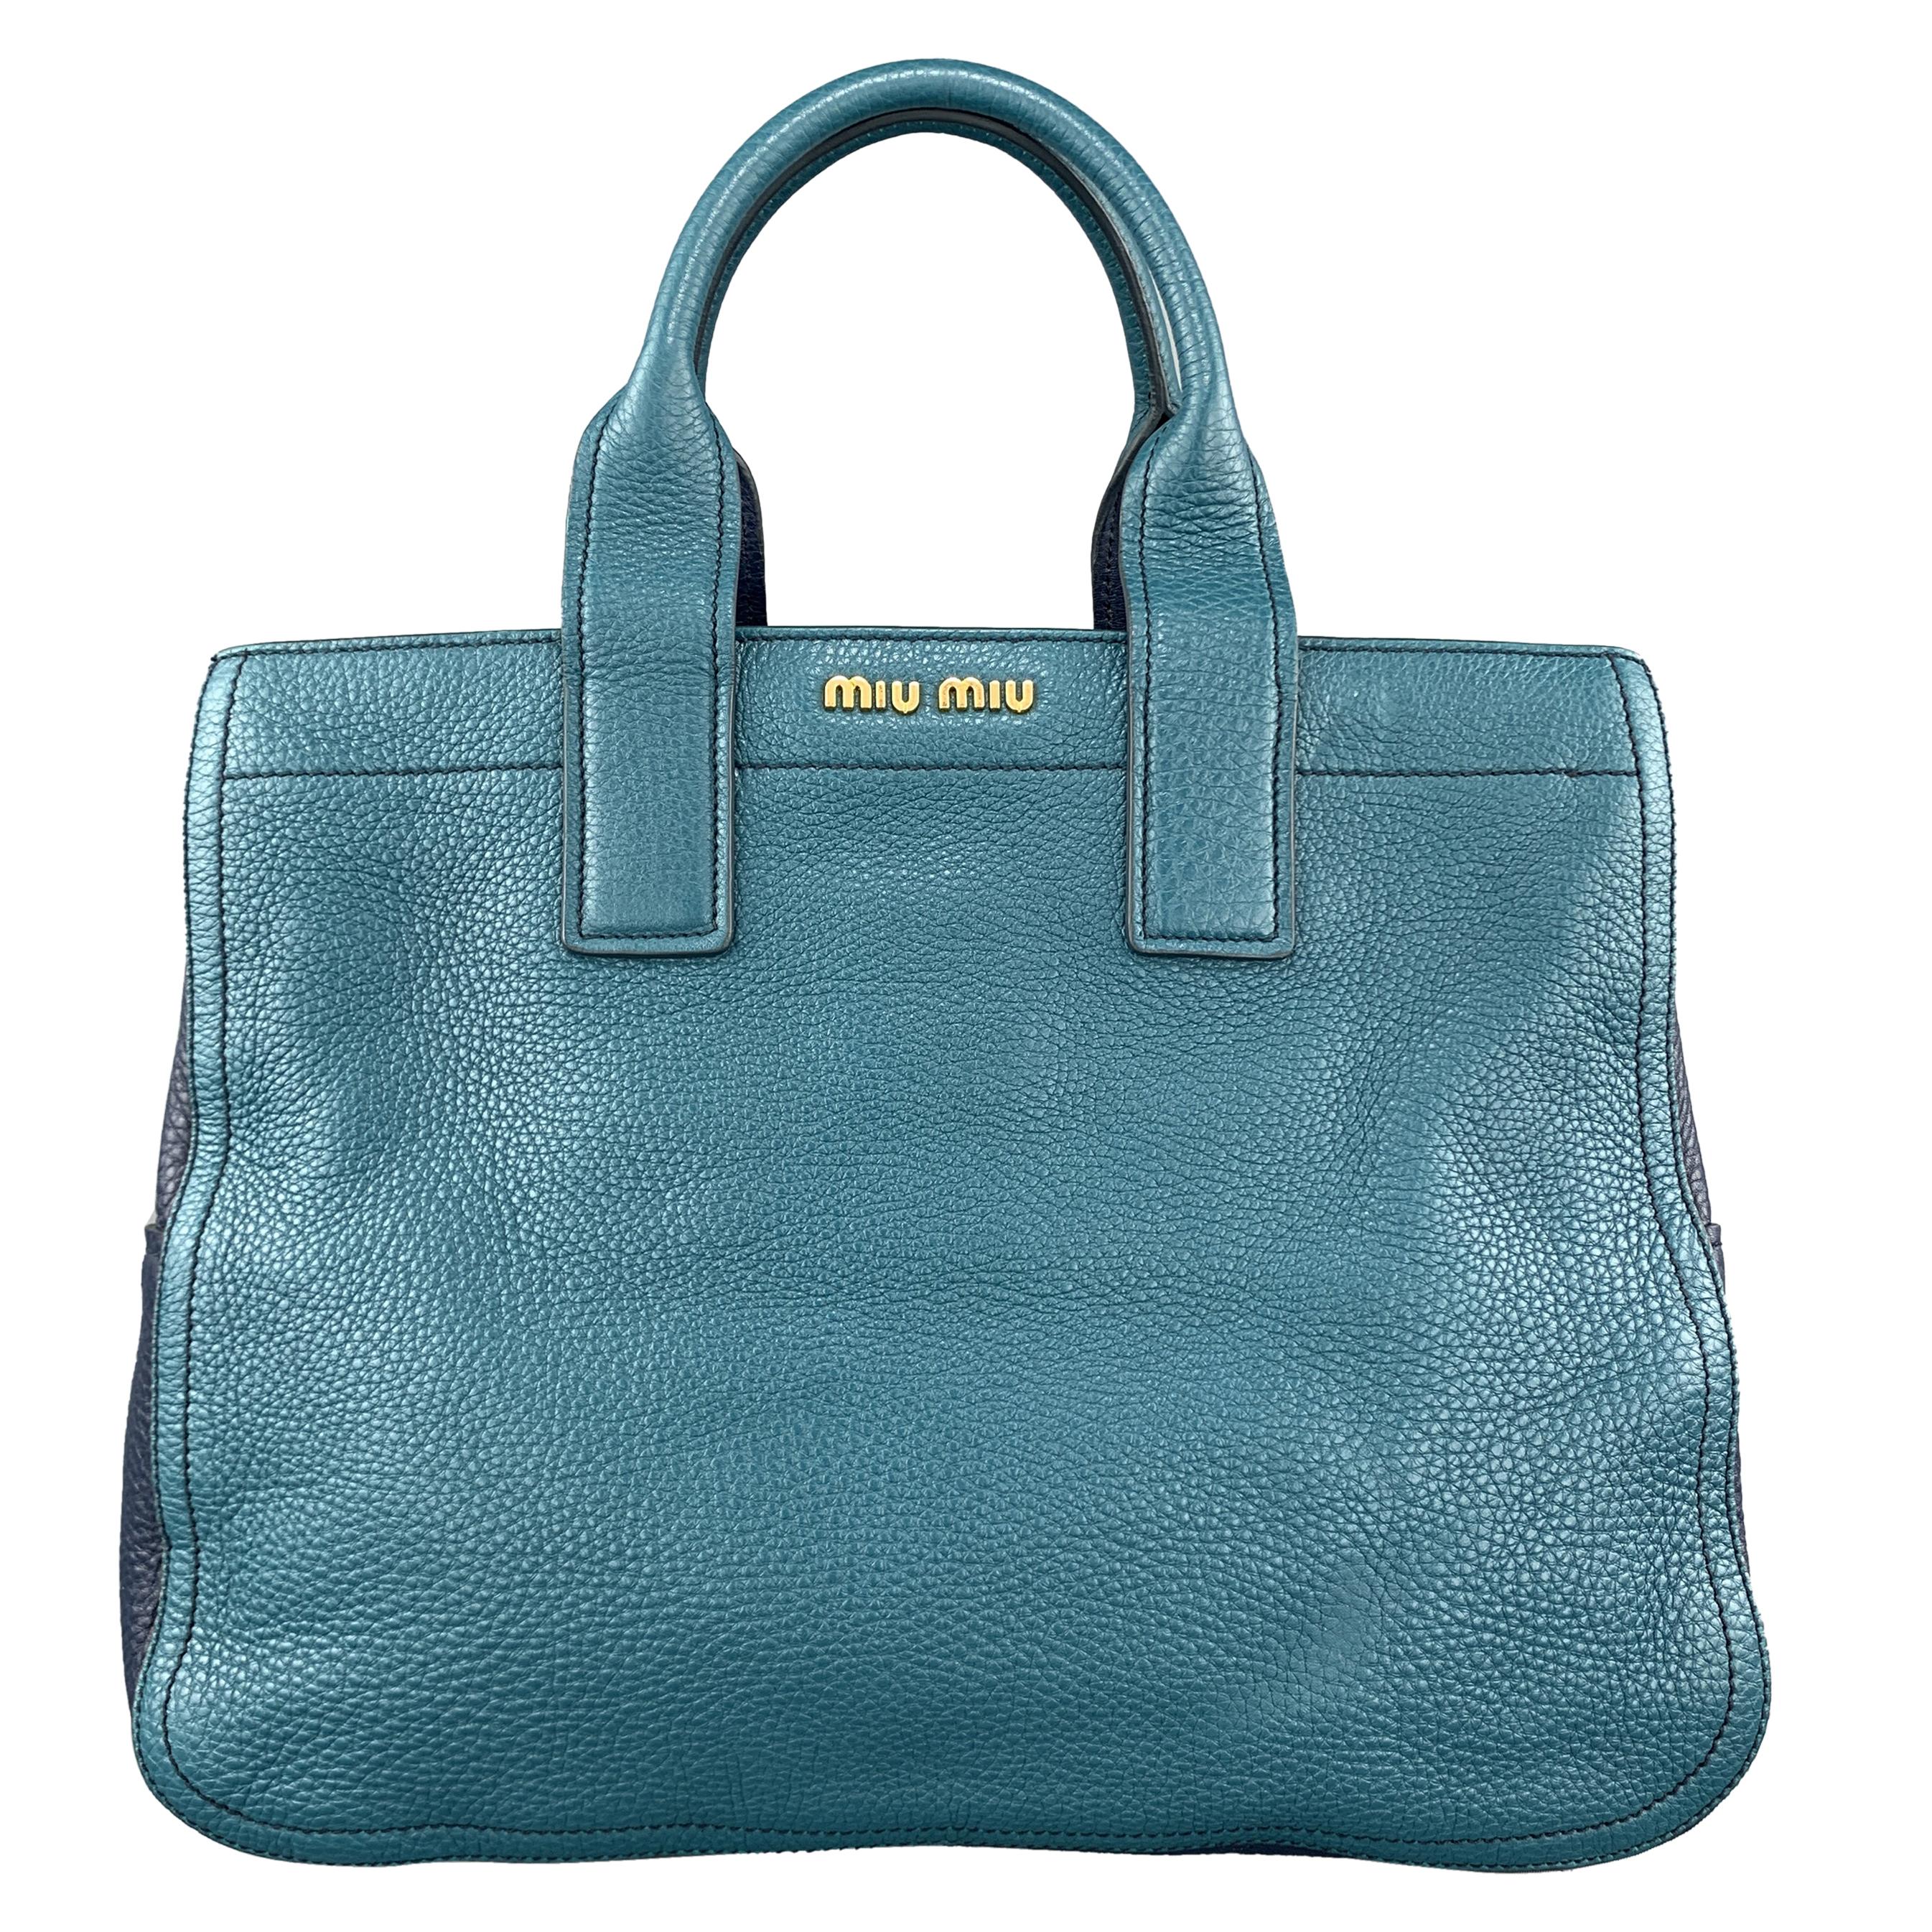 MIU MIU Teal & Blue Textured Leather Two Tone Vitello Caribo Tote Bag